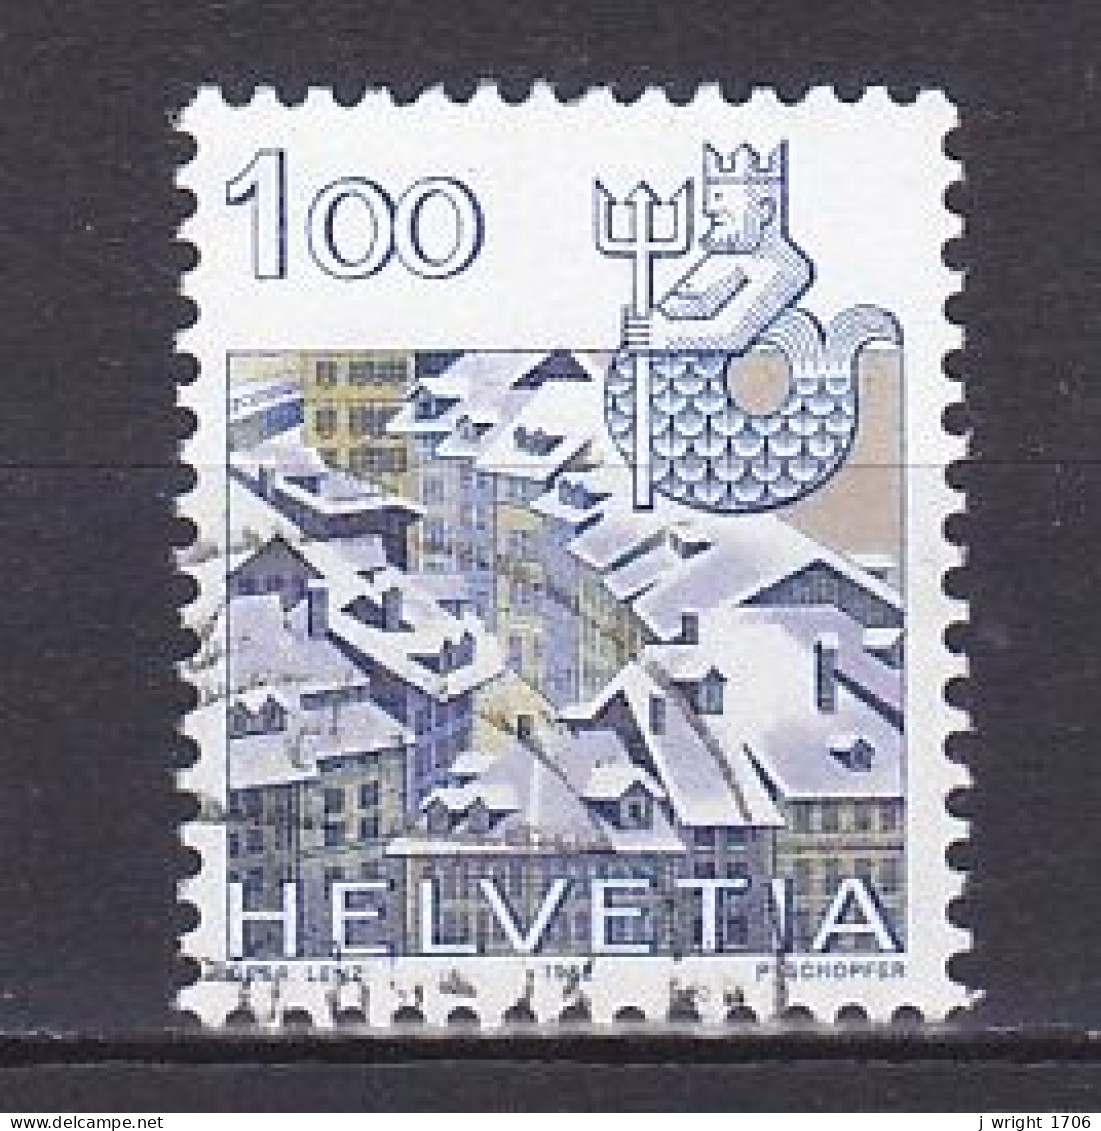 Switzerland, 1982, Zodiac & Landscape/Aquarius & Bern, 1.00Fr, USED - Used Stamps